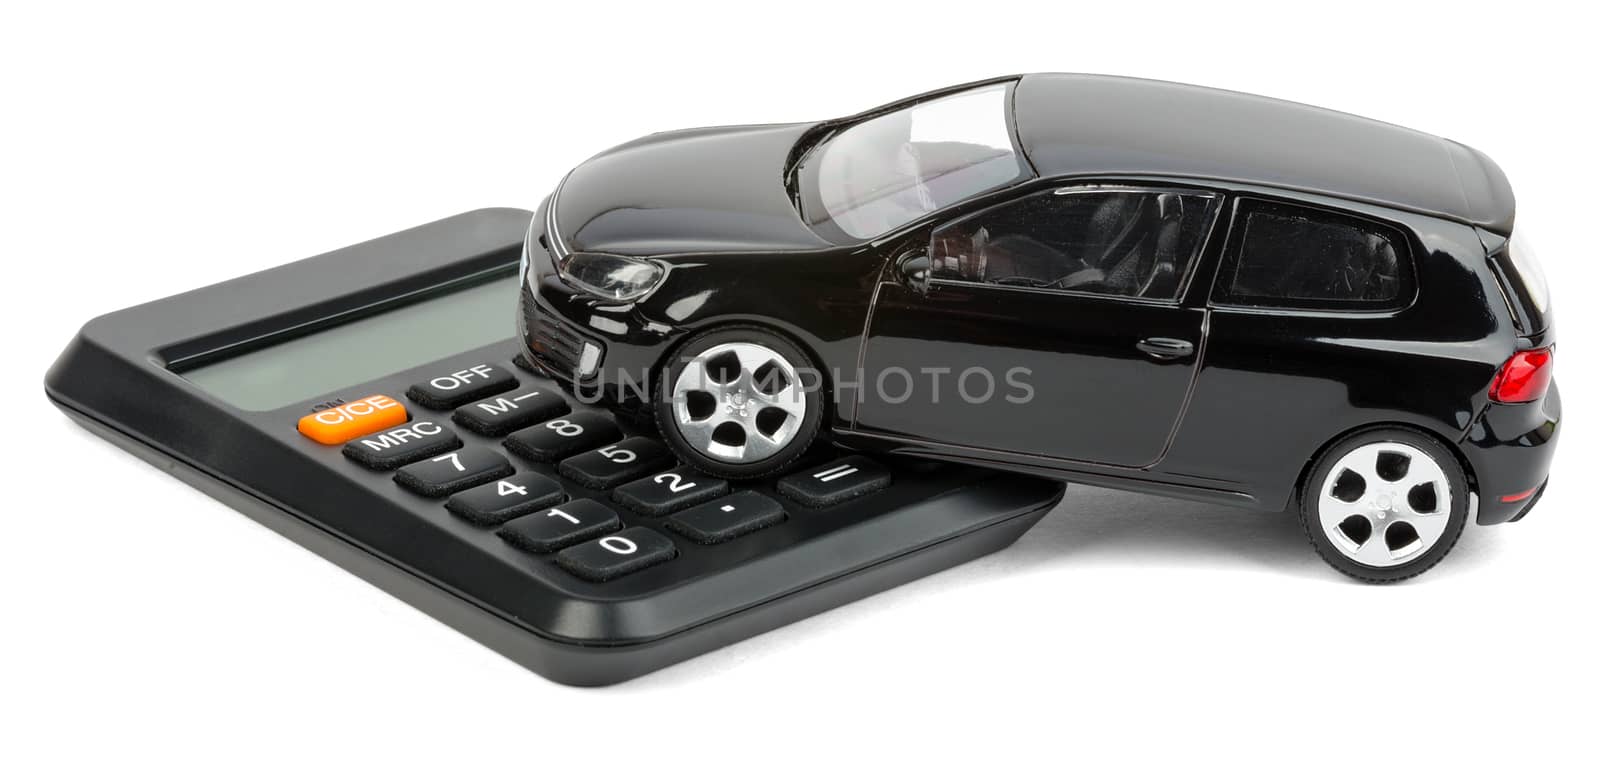 Car on calculator by cherezoff